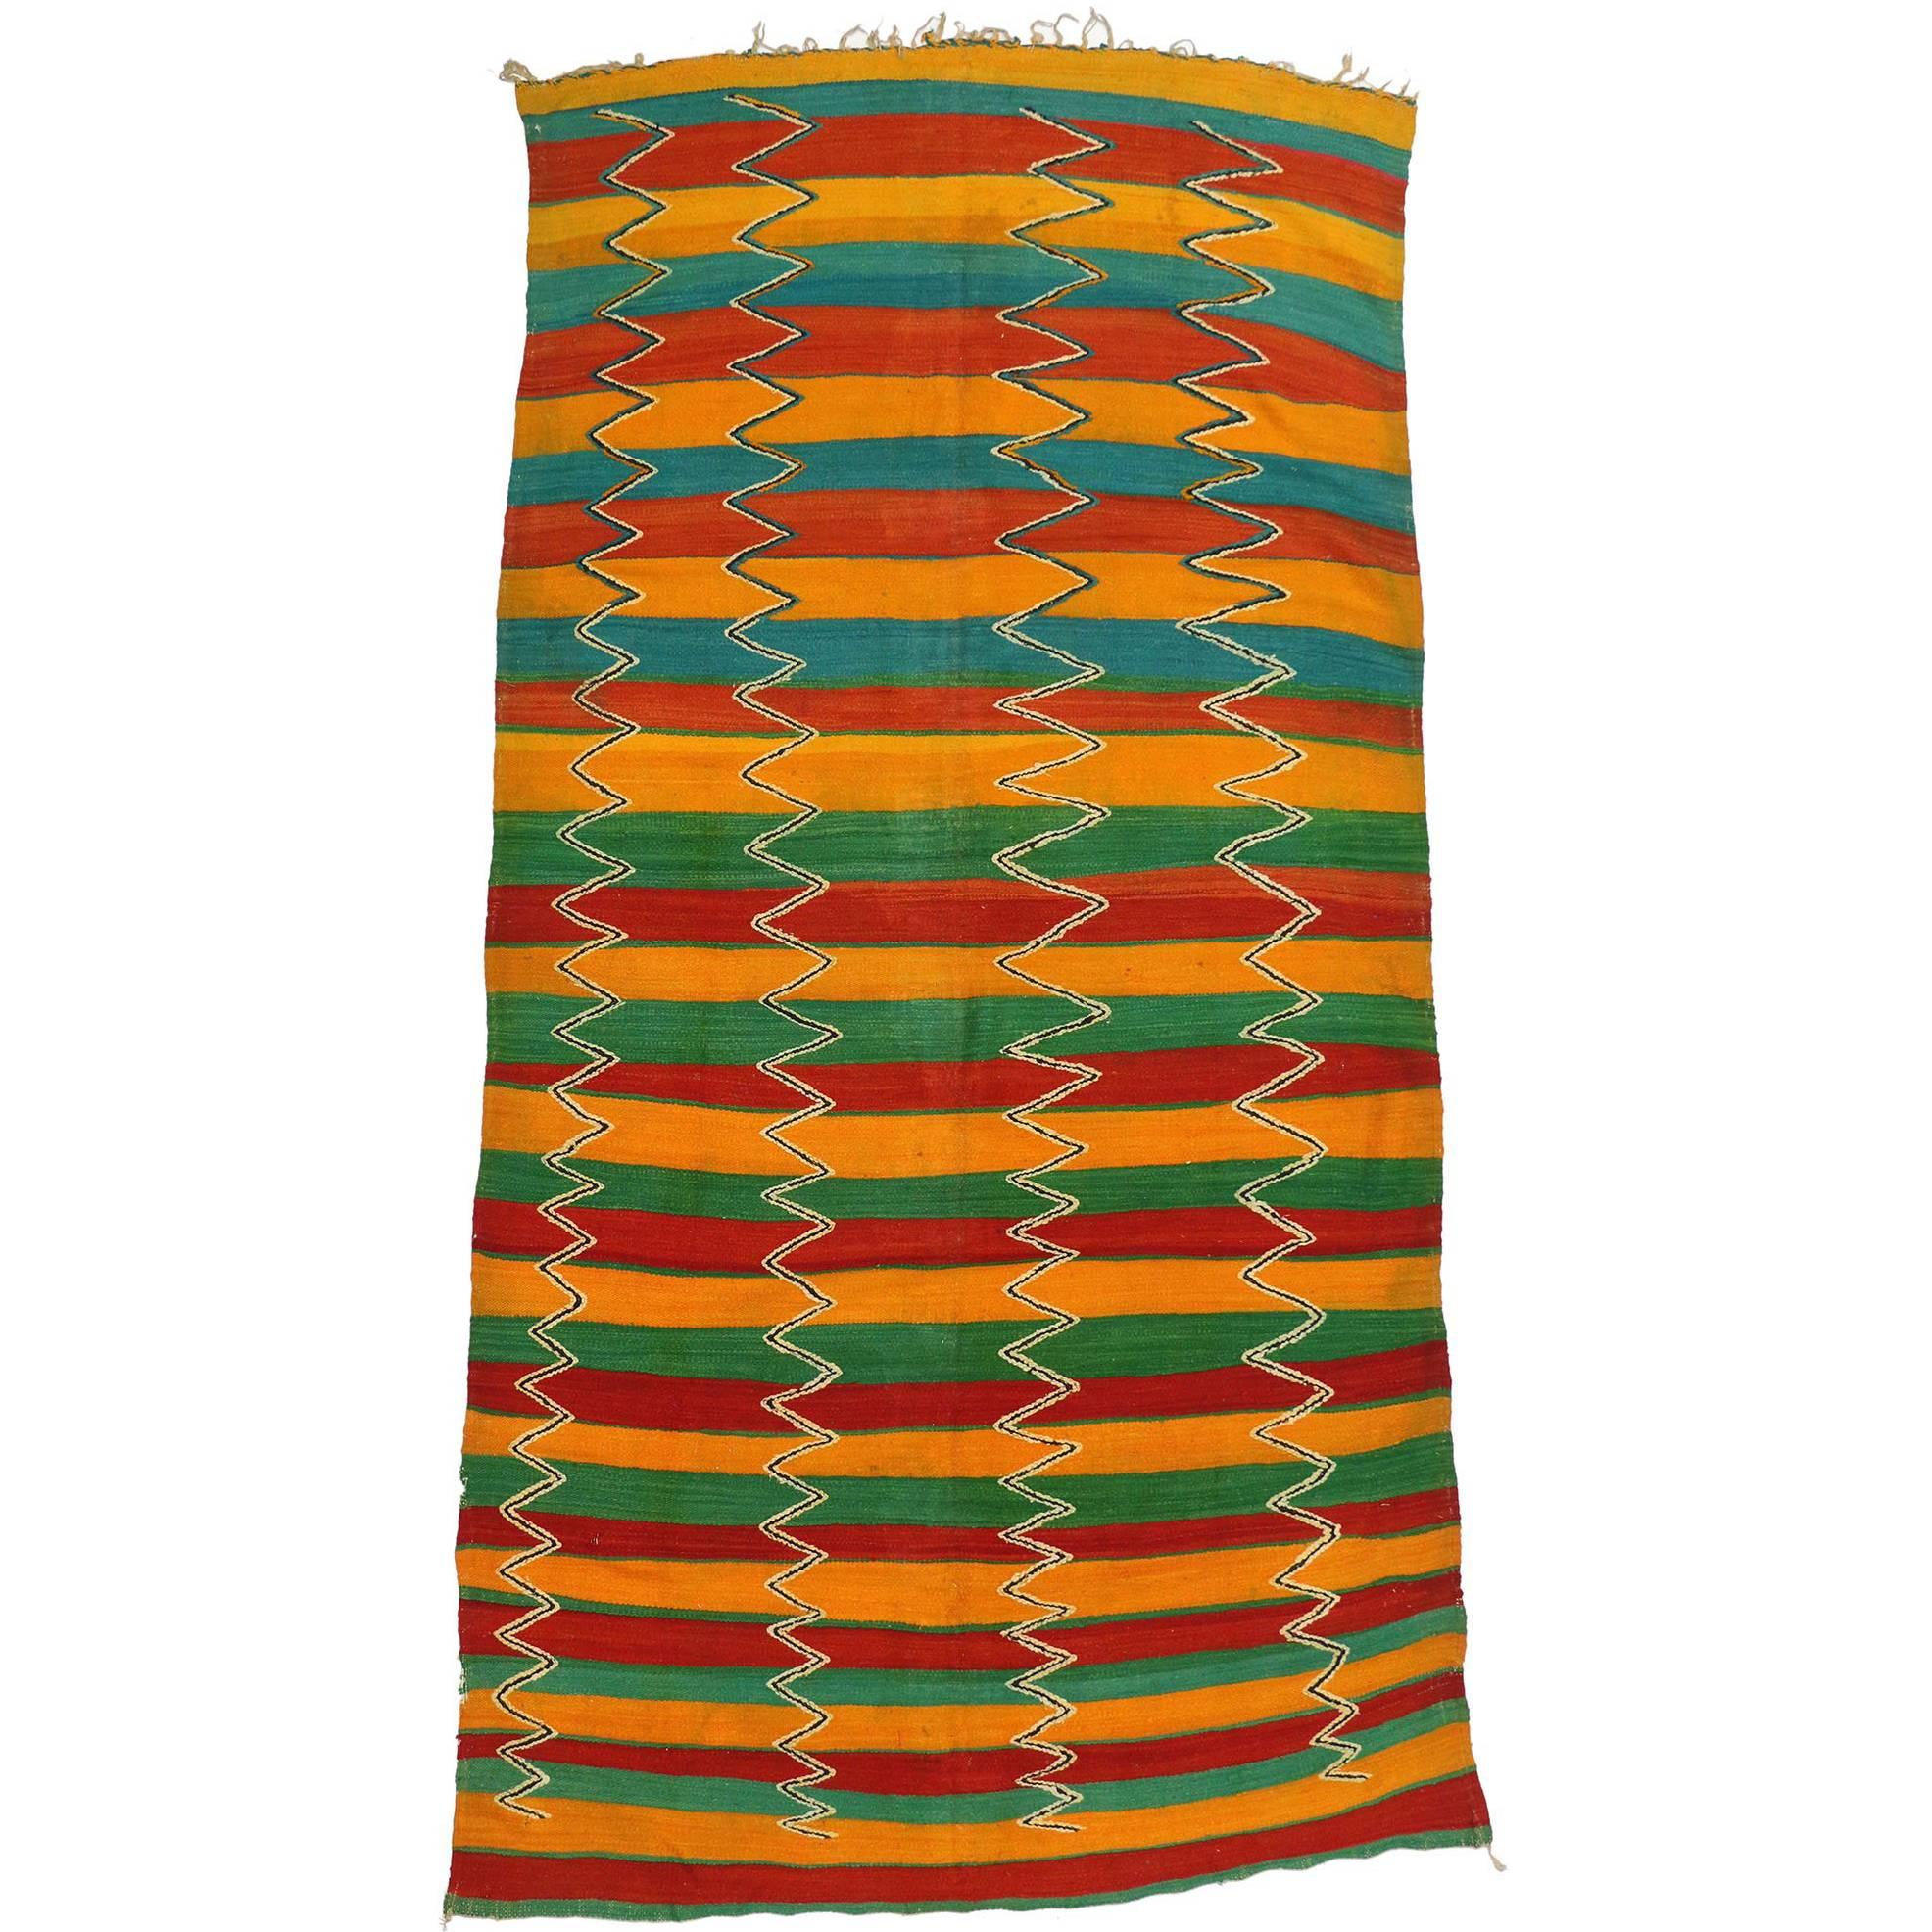 Vintage Berber Moroccan Striped Kilim Rug with Raised Design